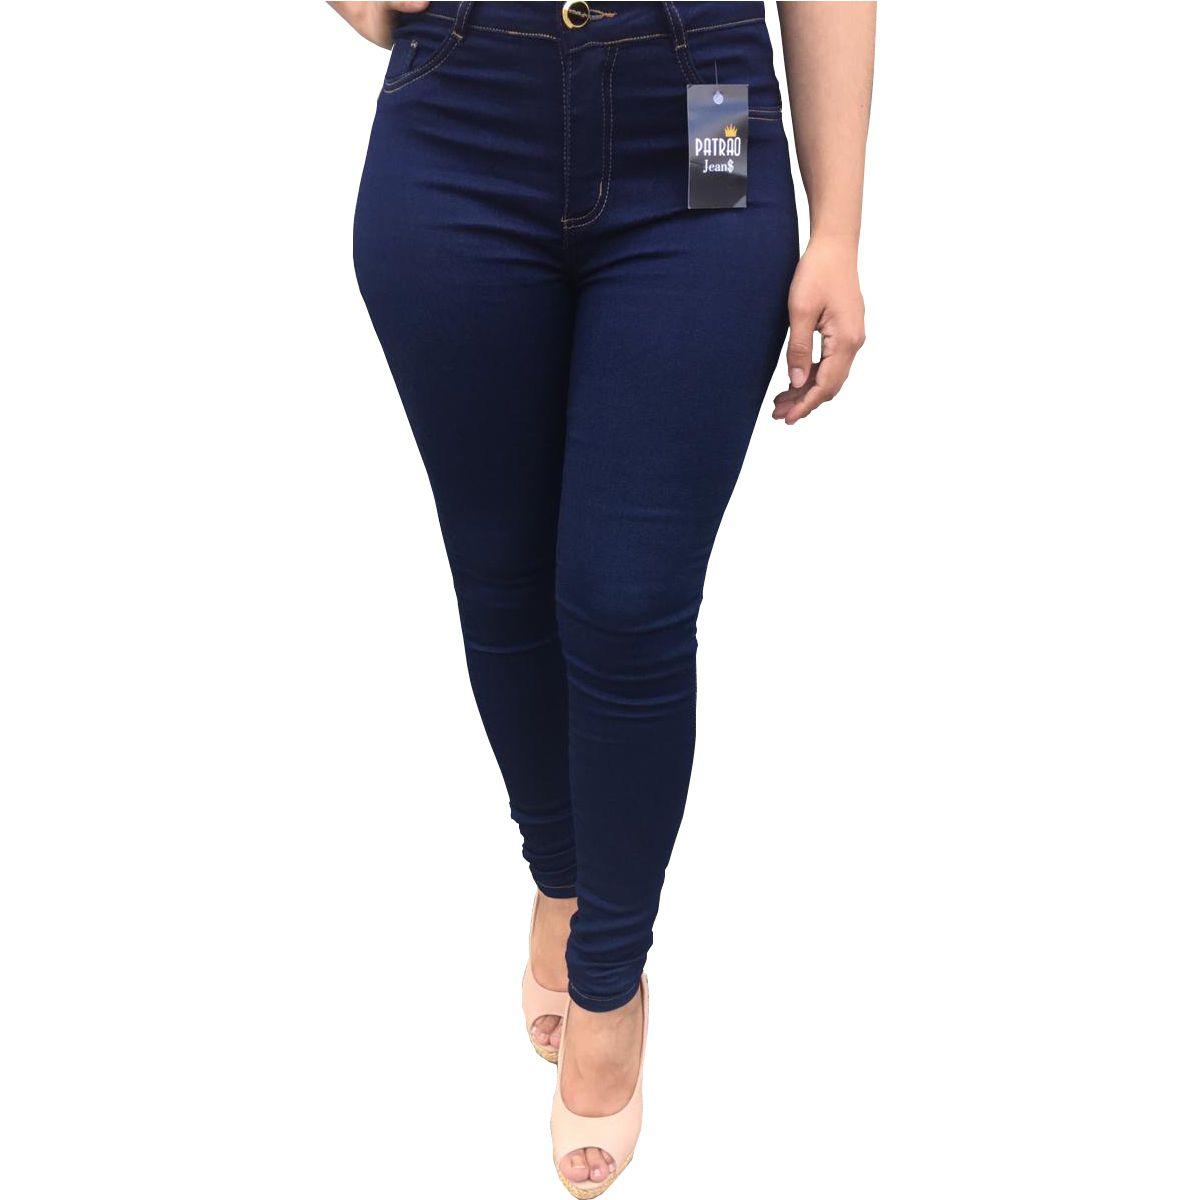 calça jeans feminina azul escuro